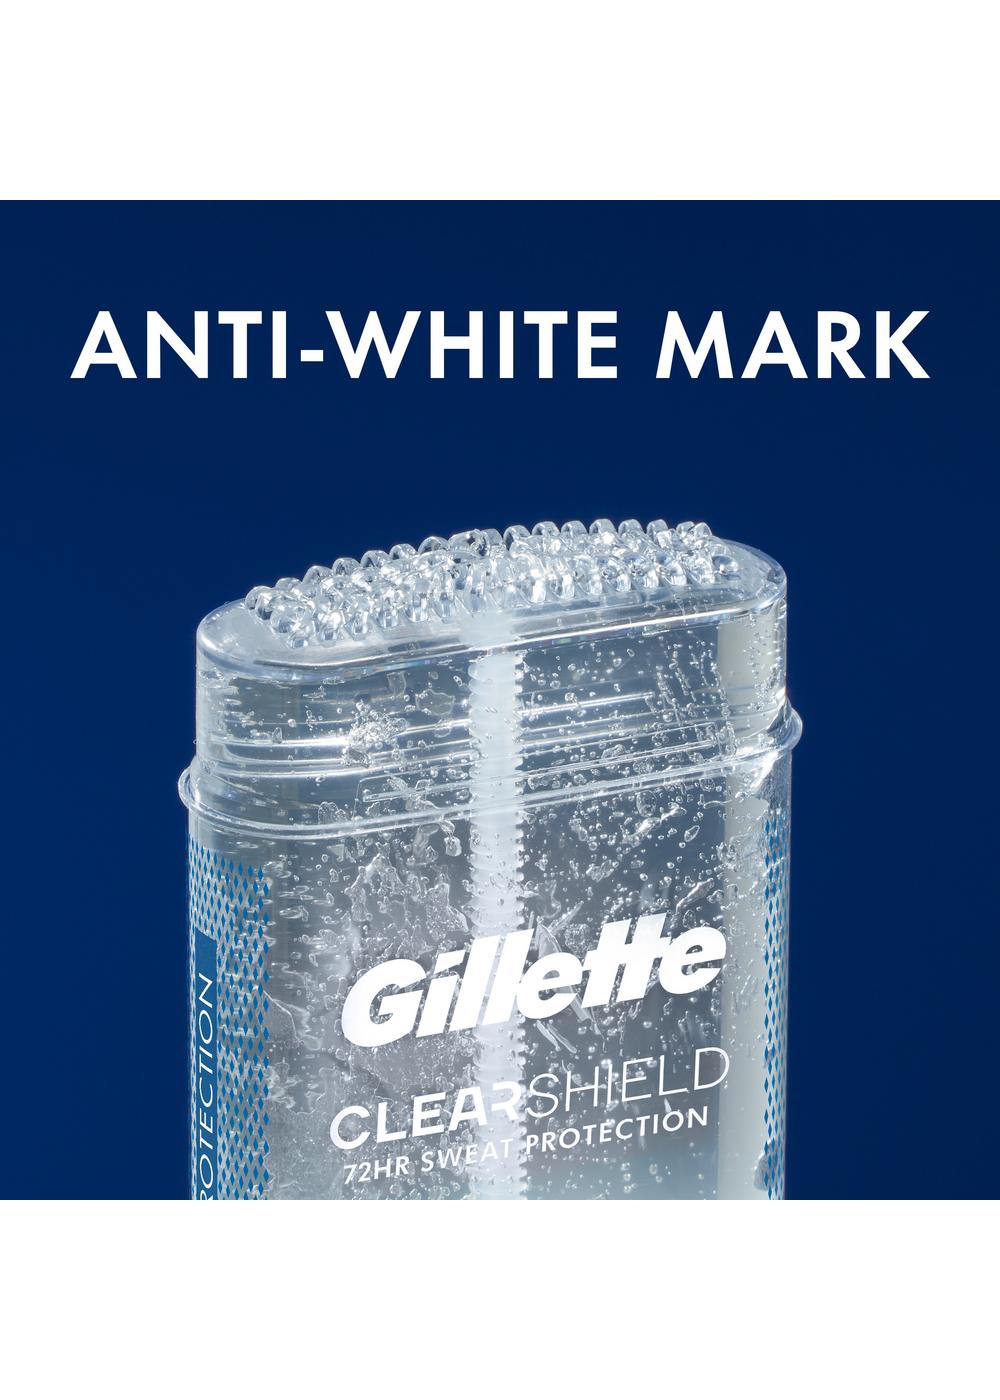 Gillette Clear Shield Antiperspirant Deodorant Gel - Tropical Breeze; image 2 of 6